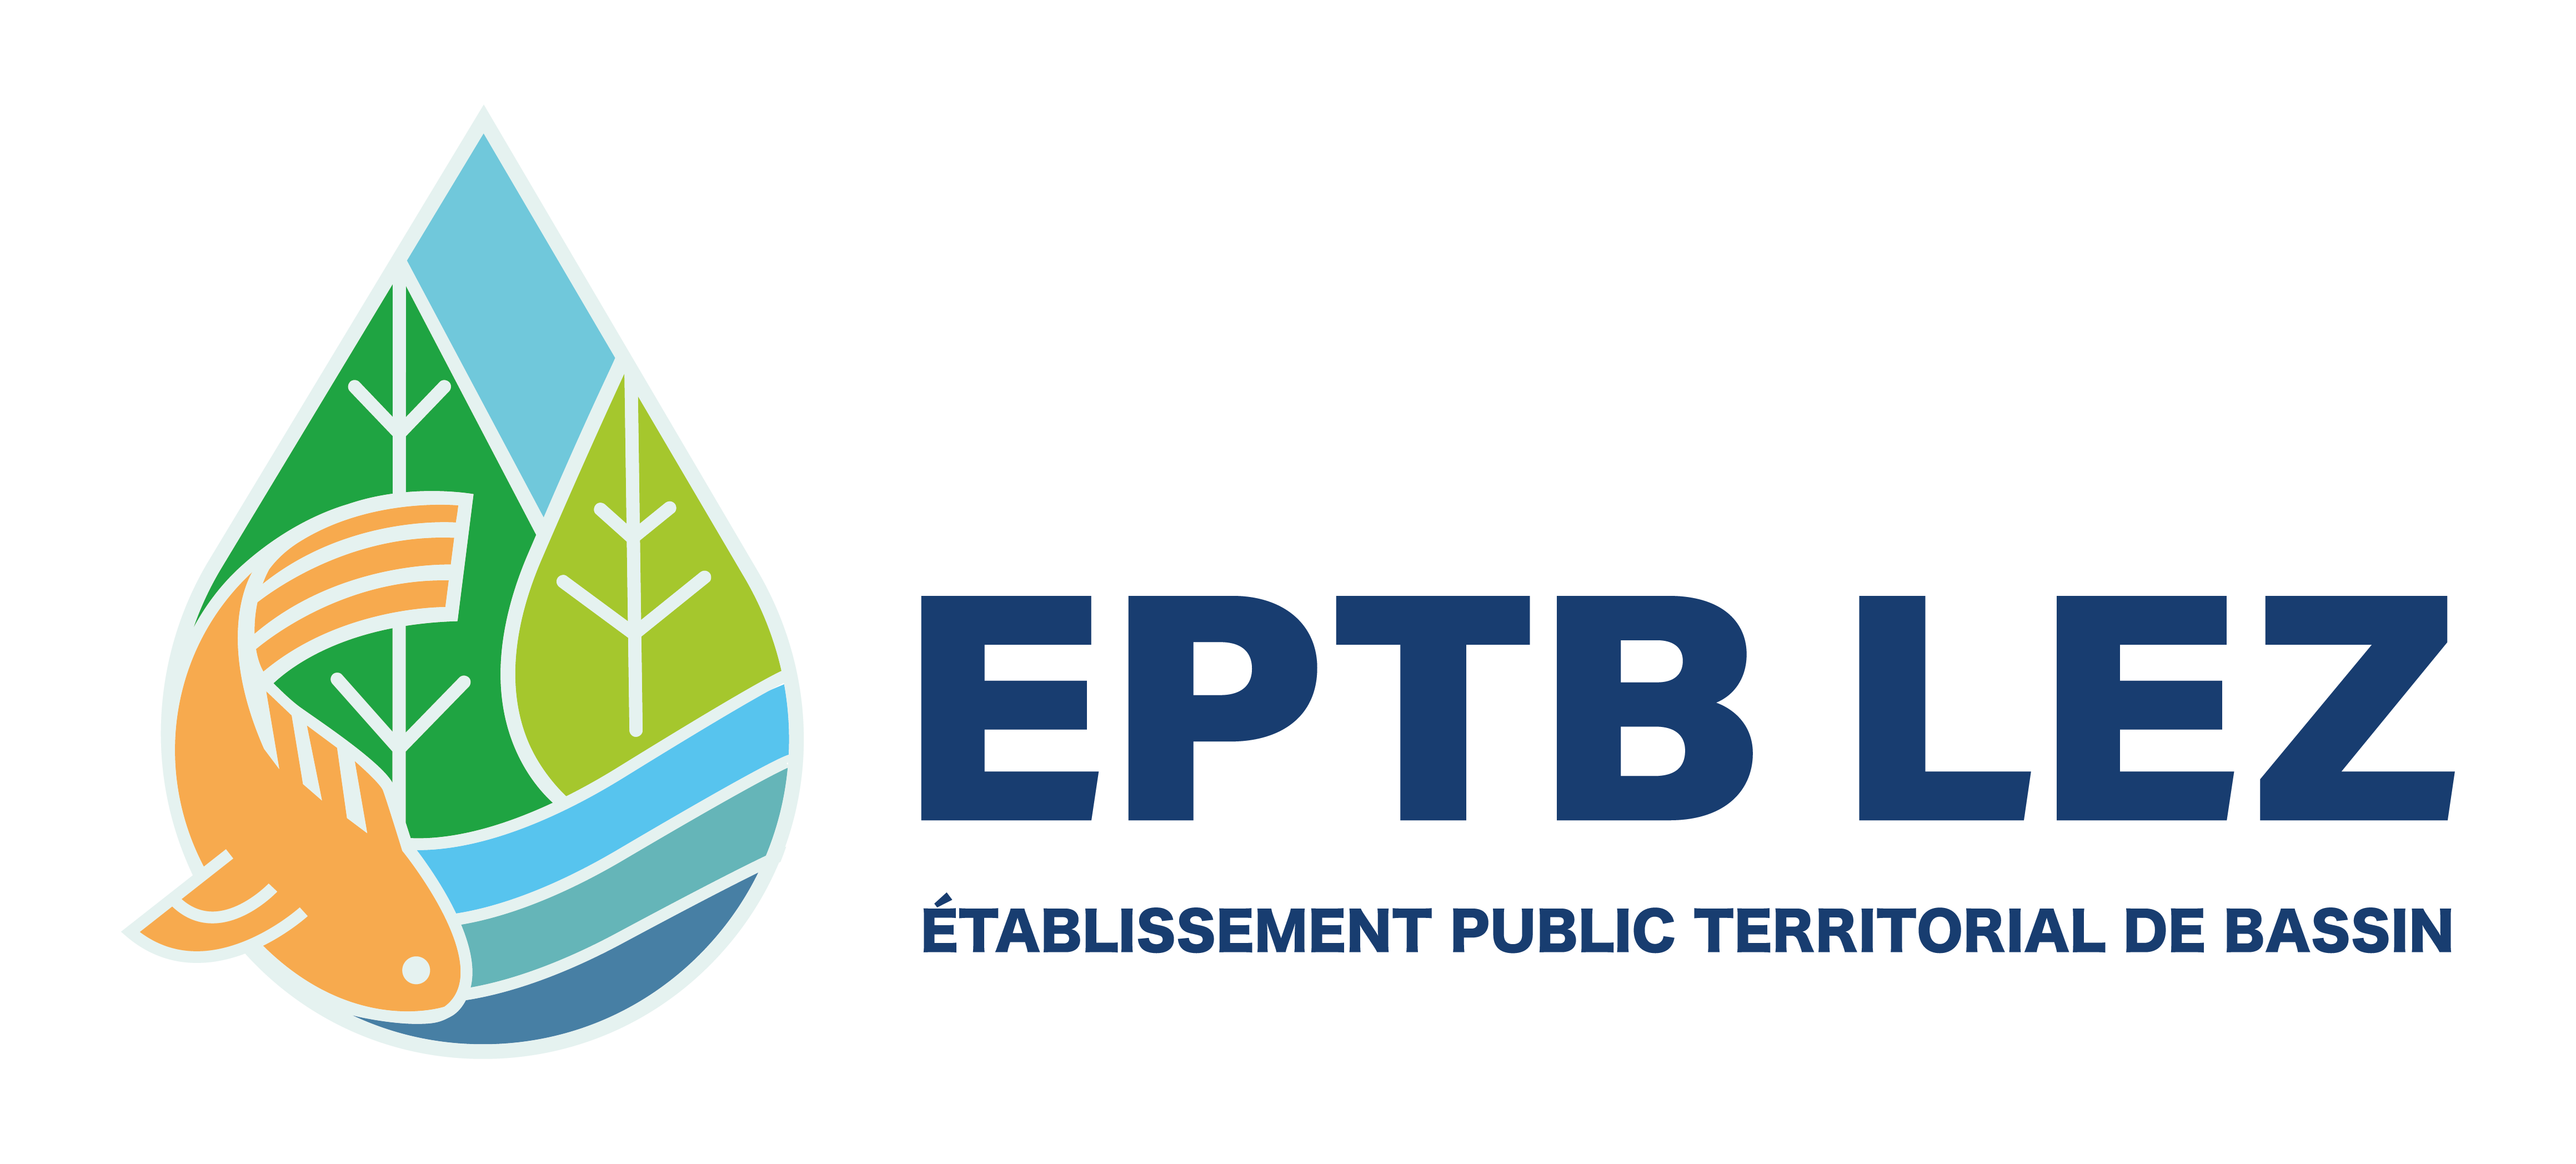 EPTB-Lez_Logo_VF_Horizontal.png